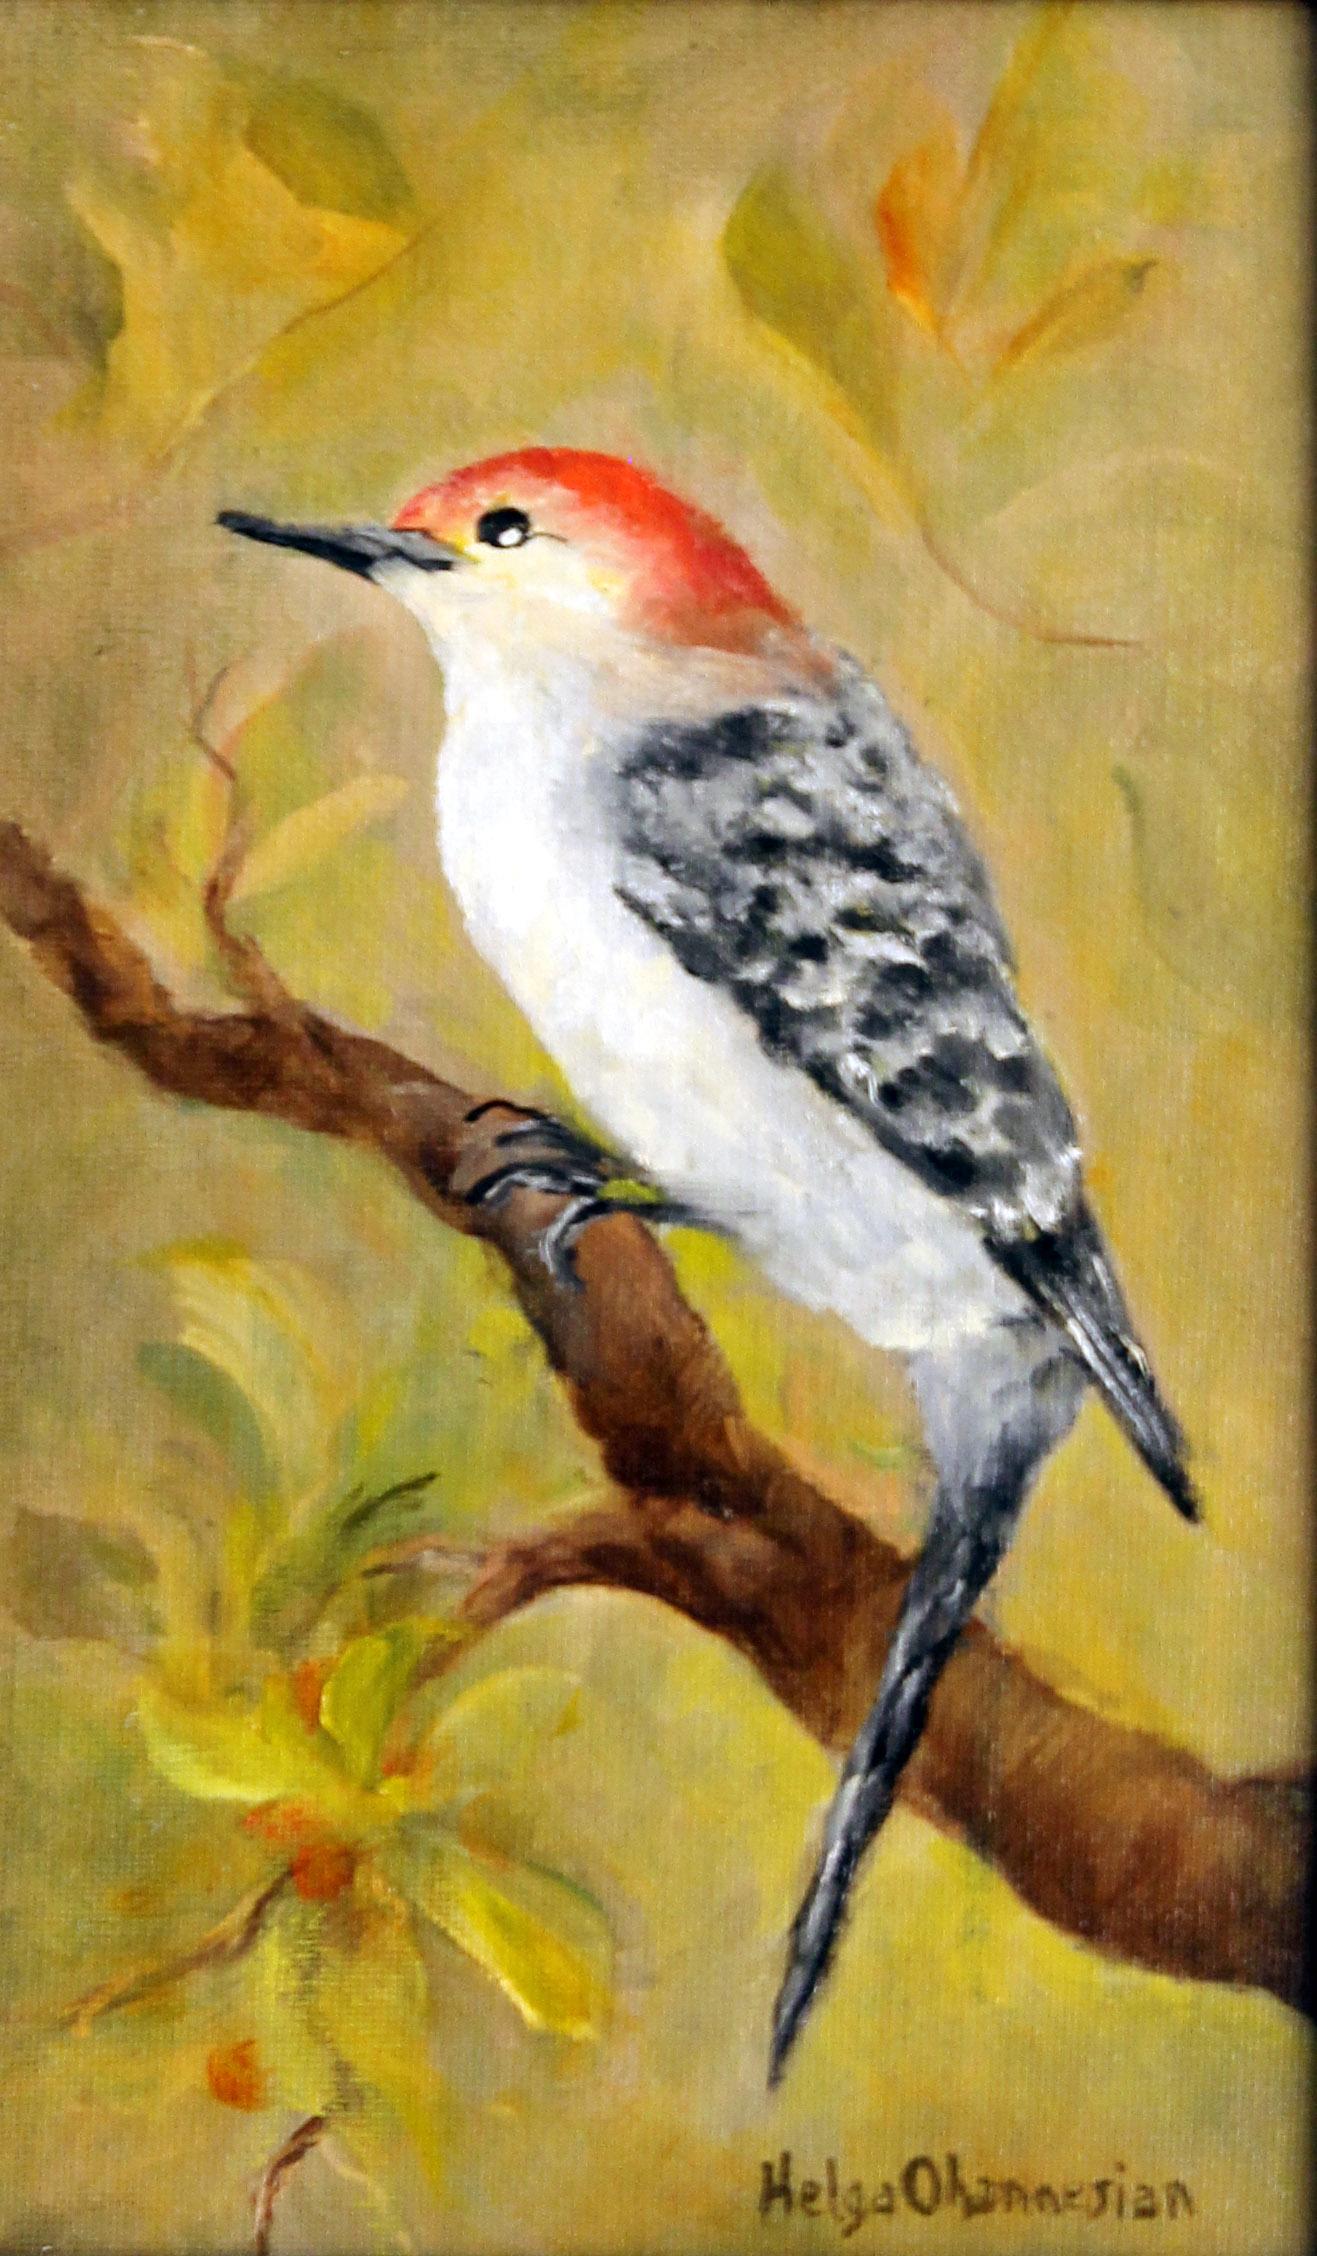 Helga Ohannesian Animal Painting - Knock on Wood. The orange bird. 